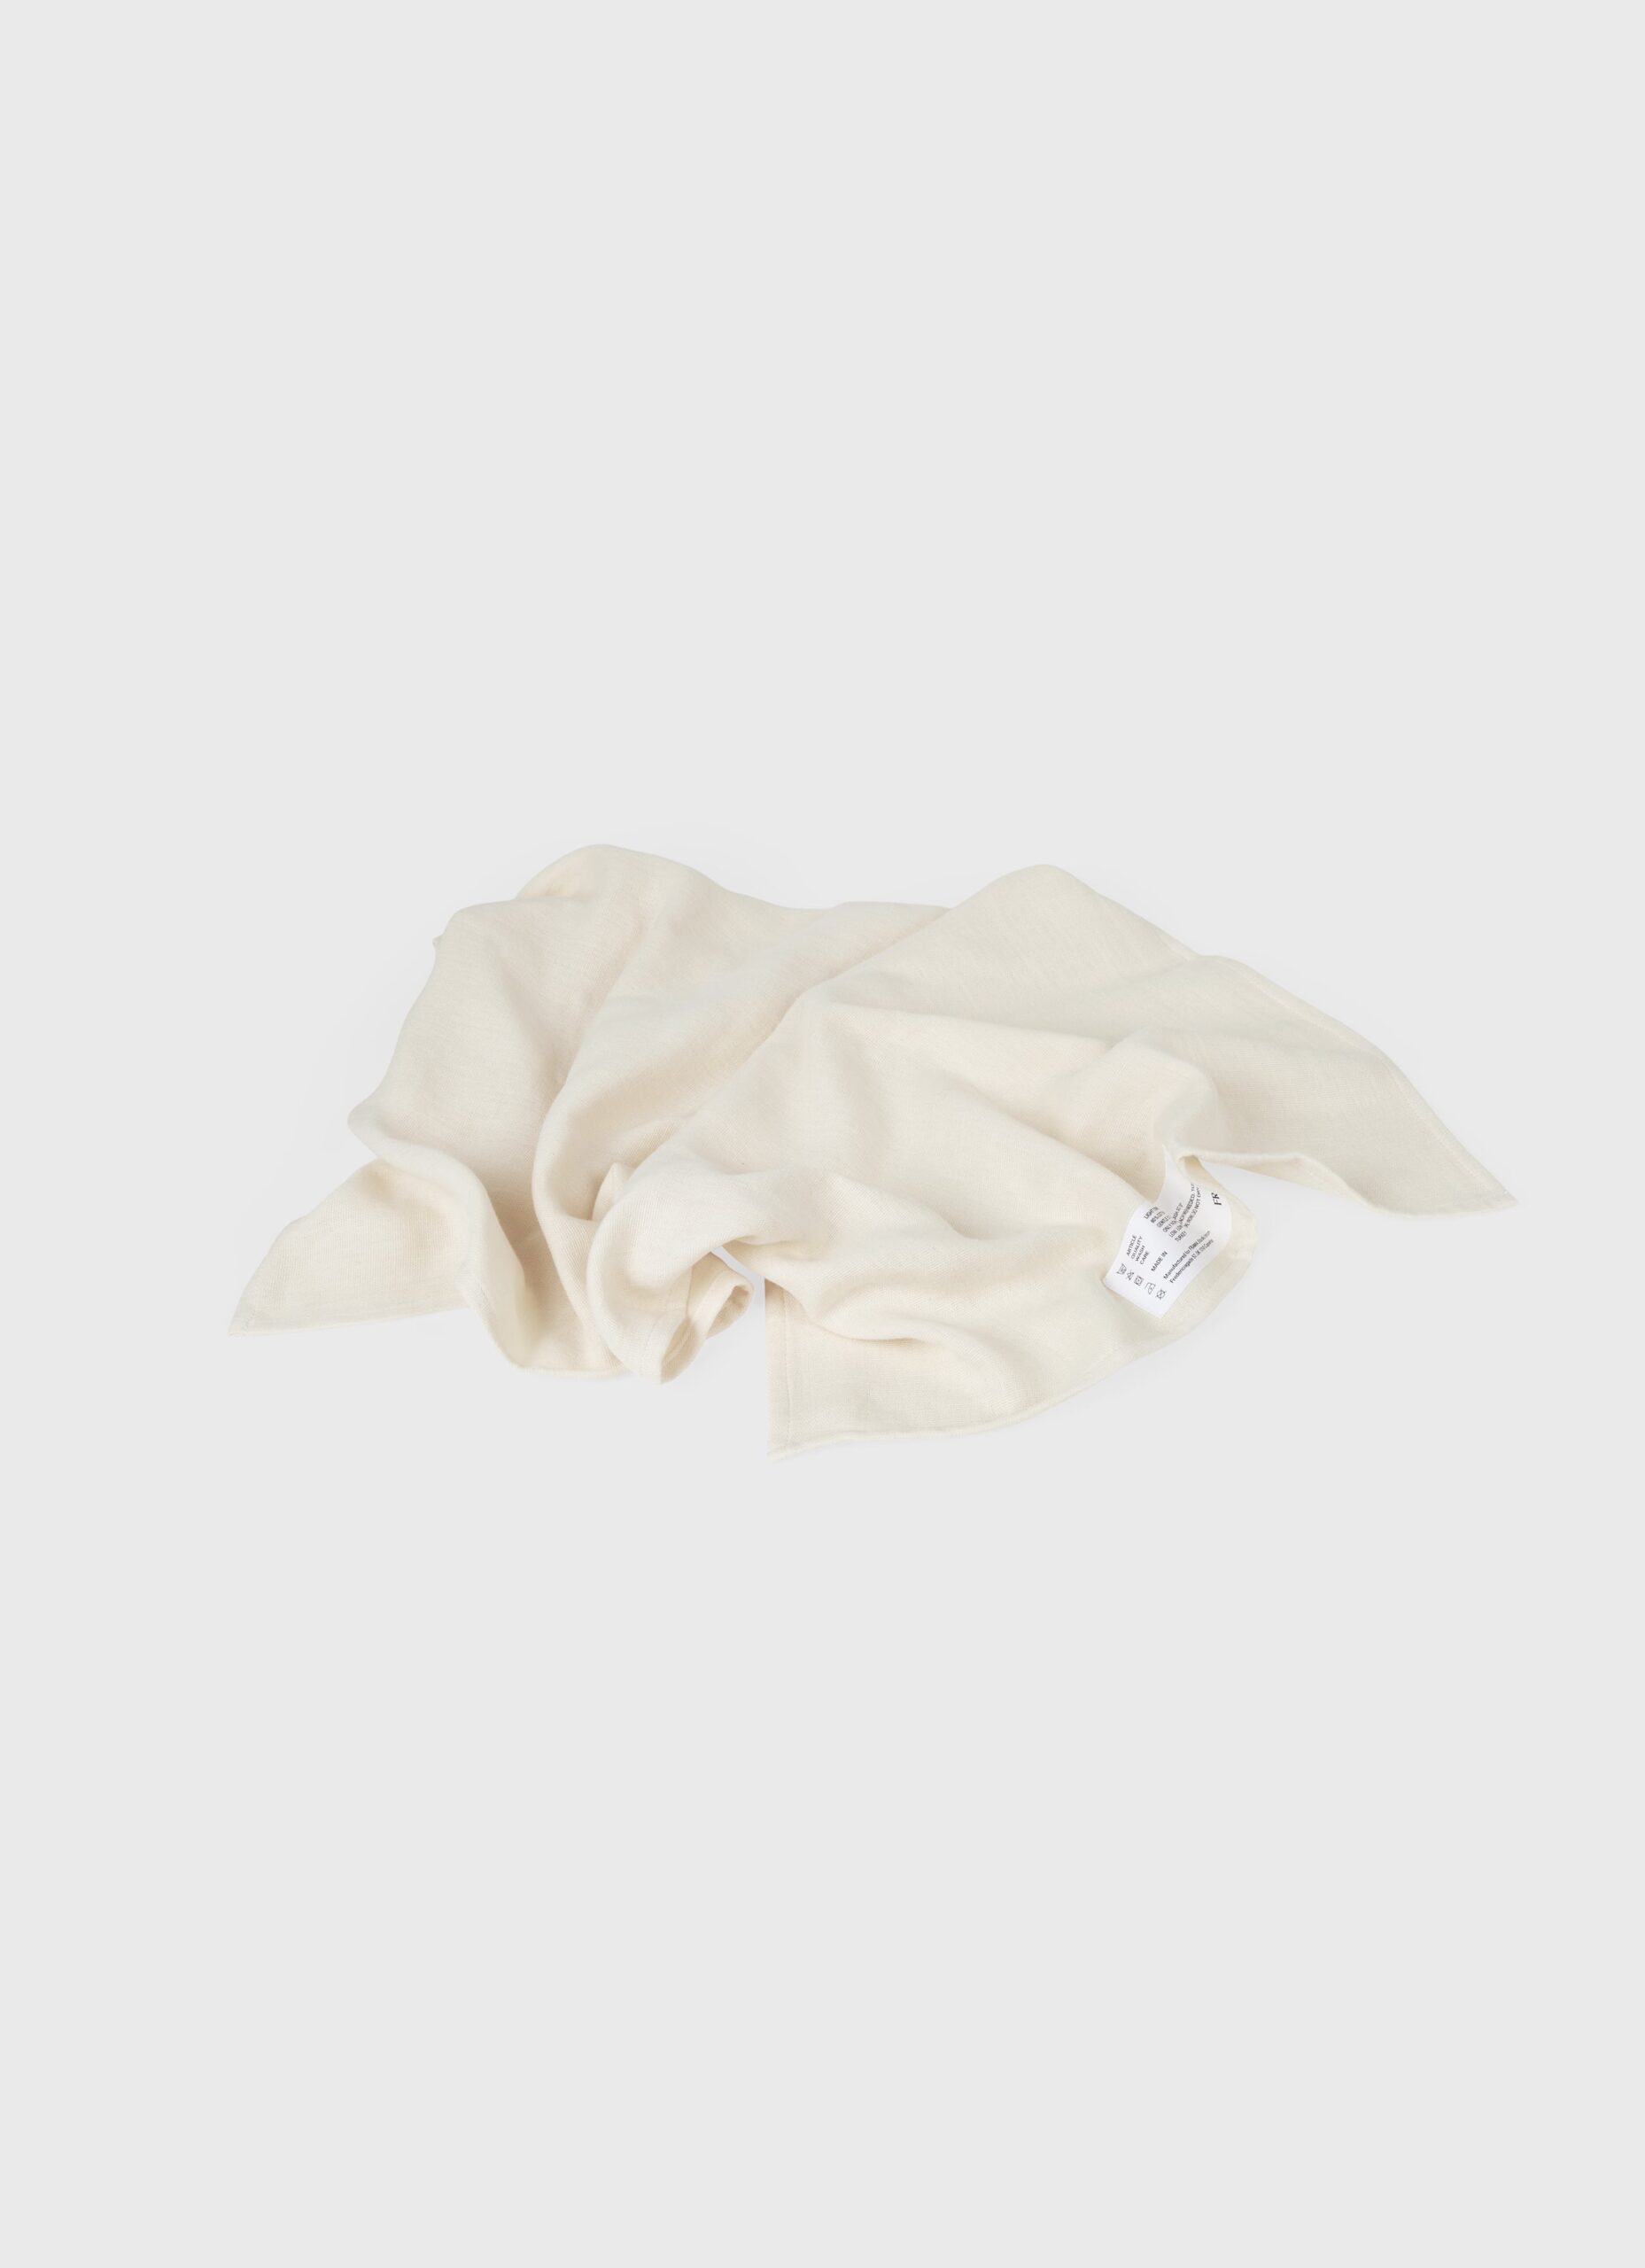 Frama - Light Towel - Bone White - Hand Towel